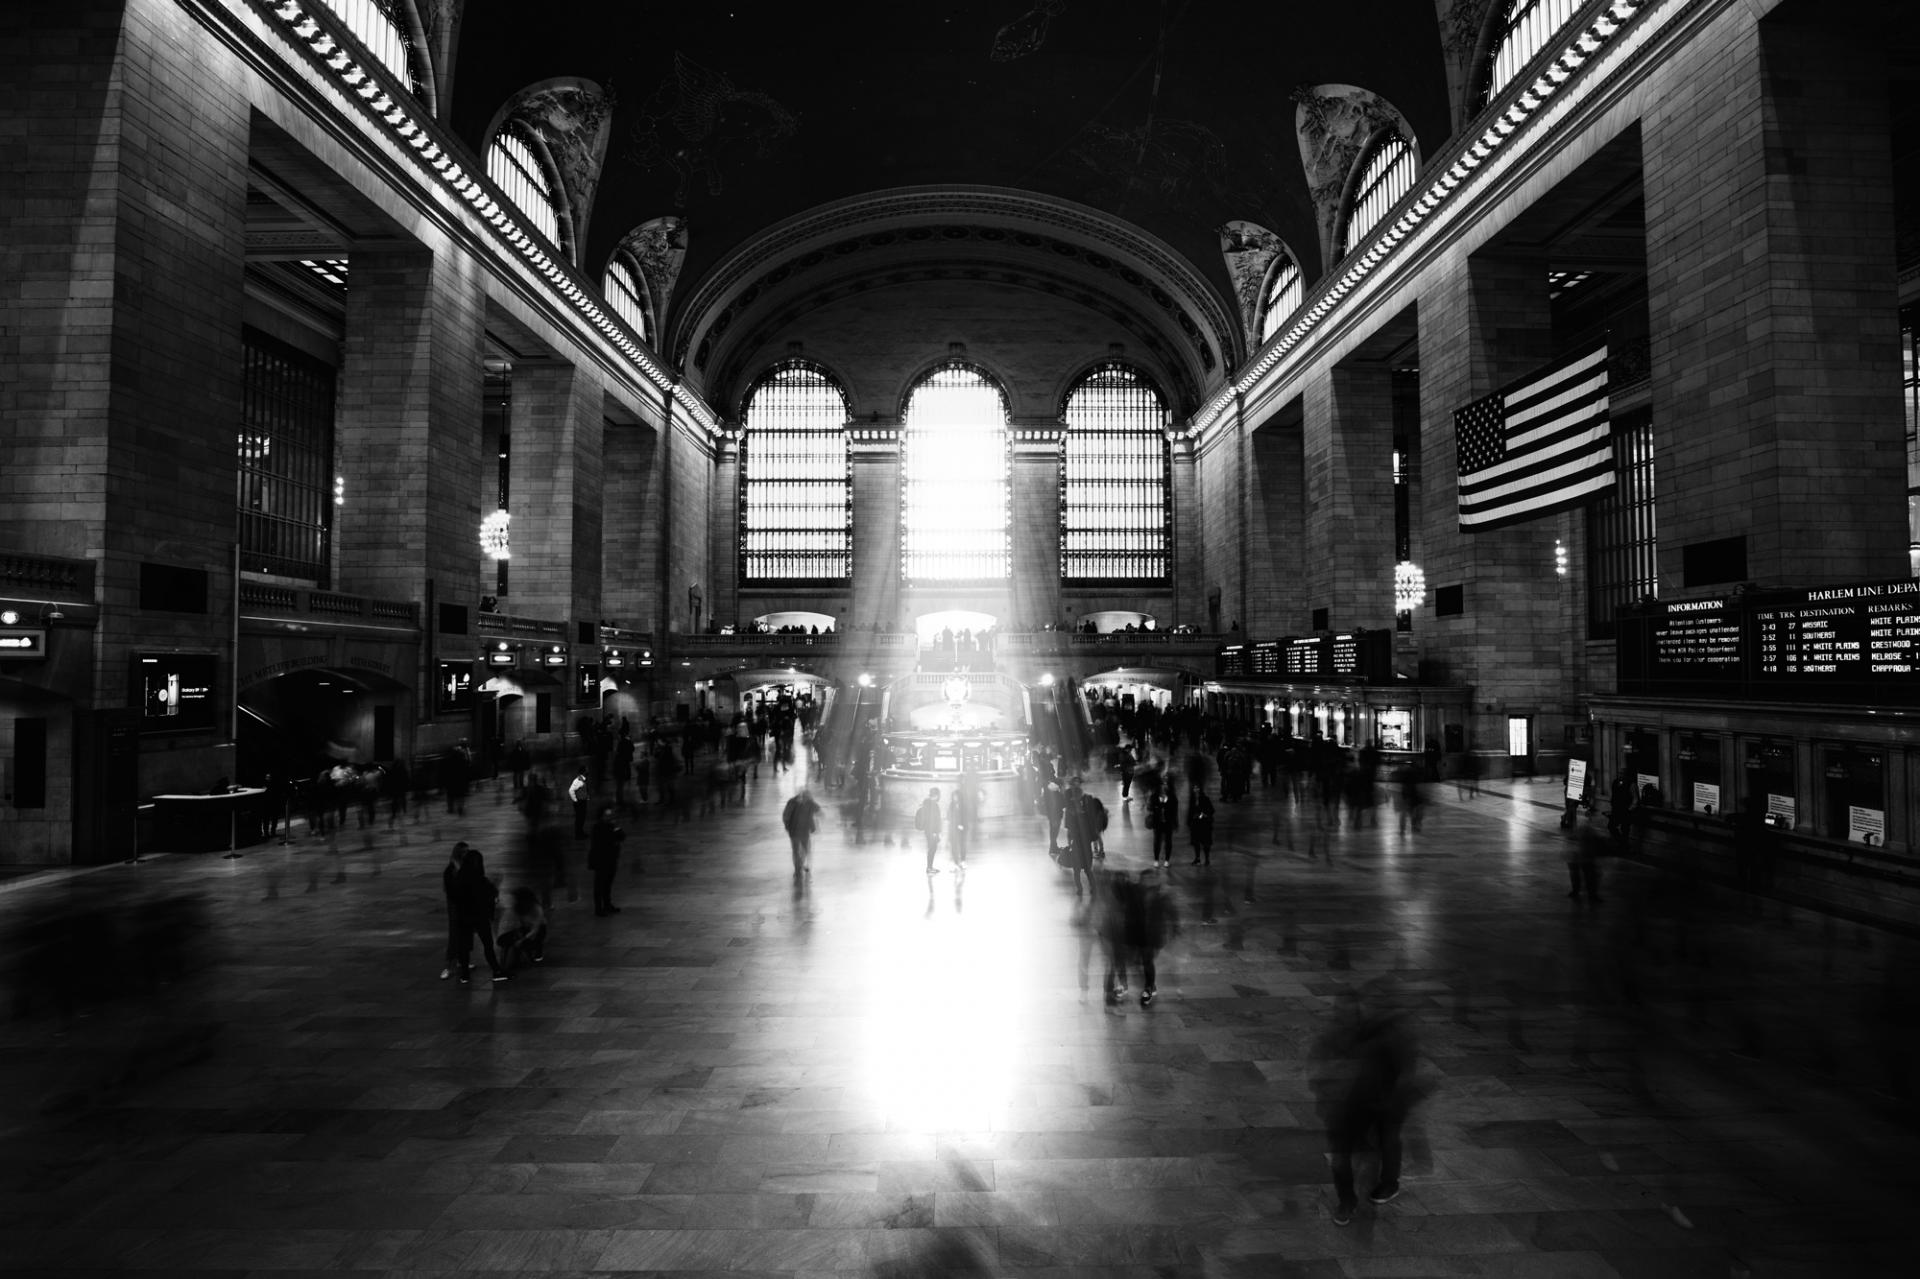 New York Photography Awards Winner - Grand Central Terminal